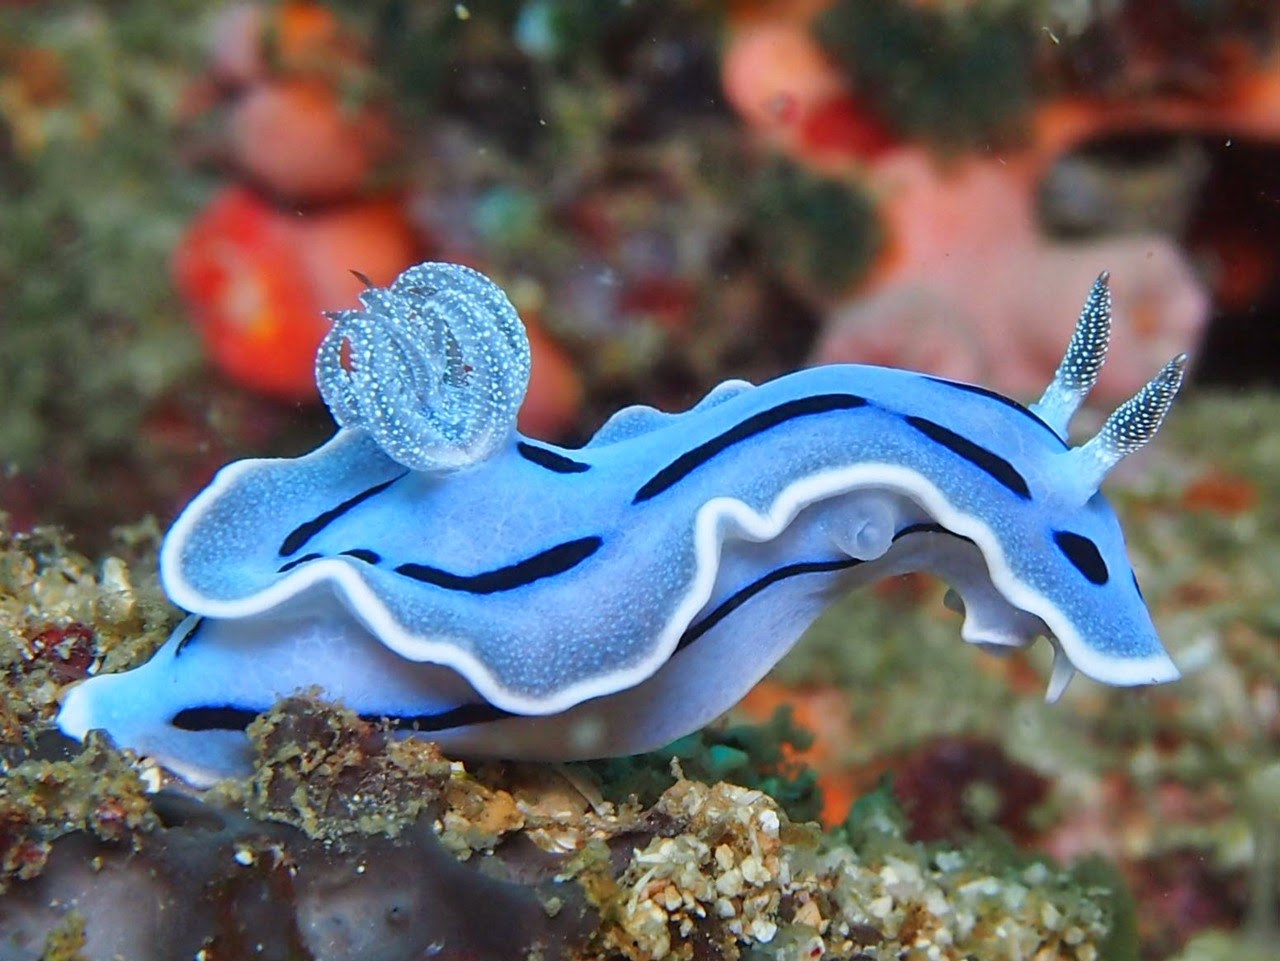 Catalogue of Organisms: Stunning Sea Slugs